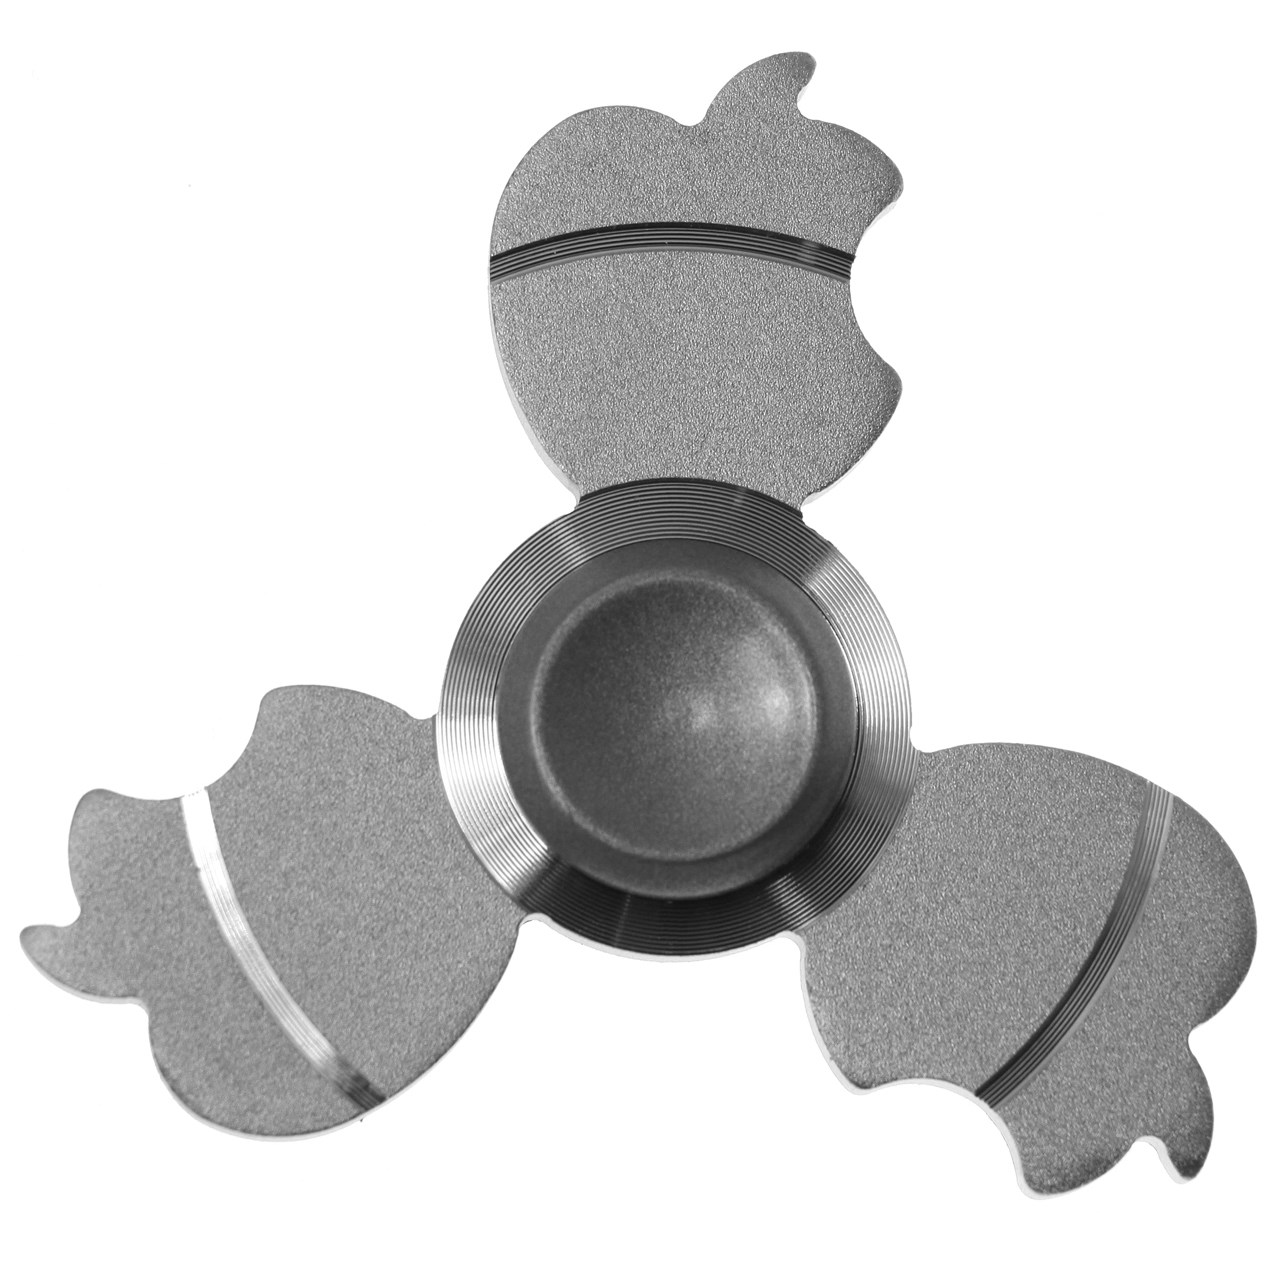 اسپینر دستی مدل three silver apple blades